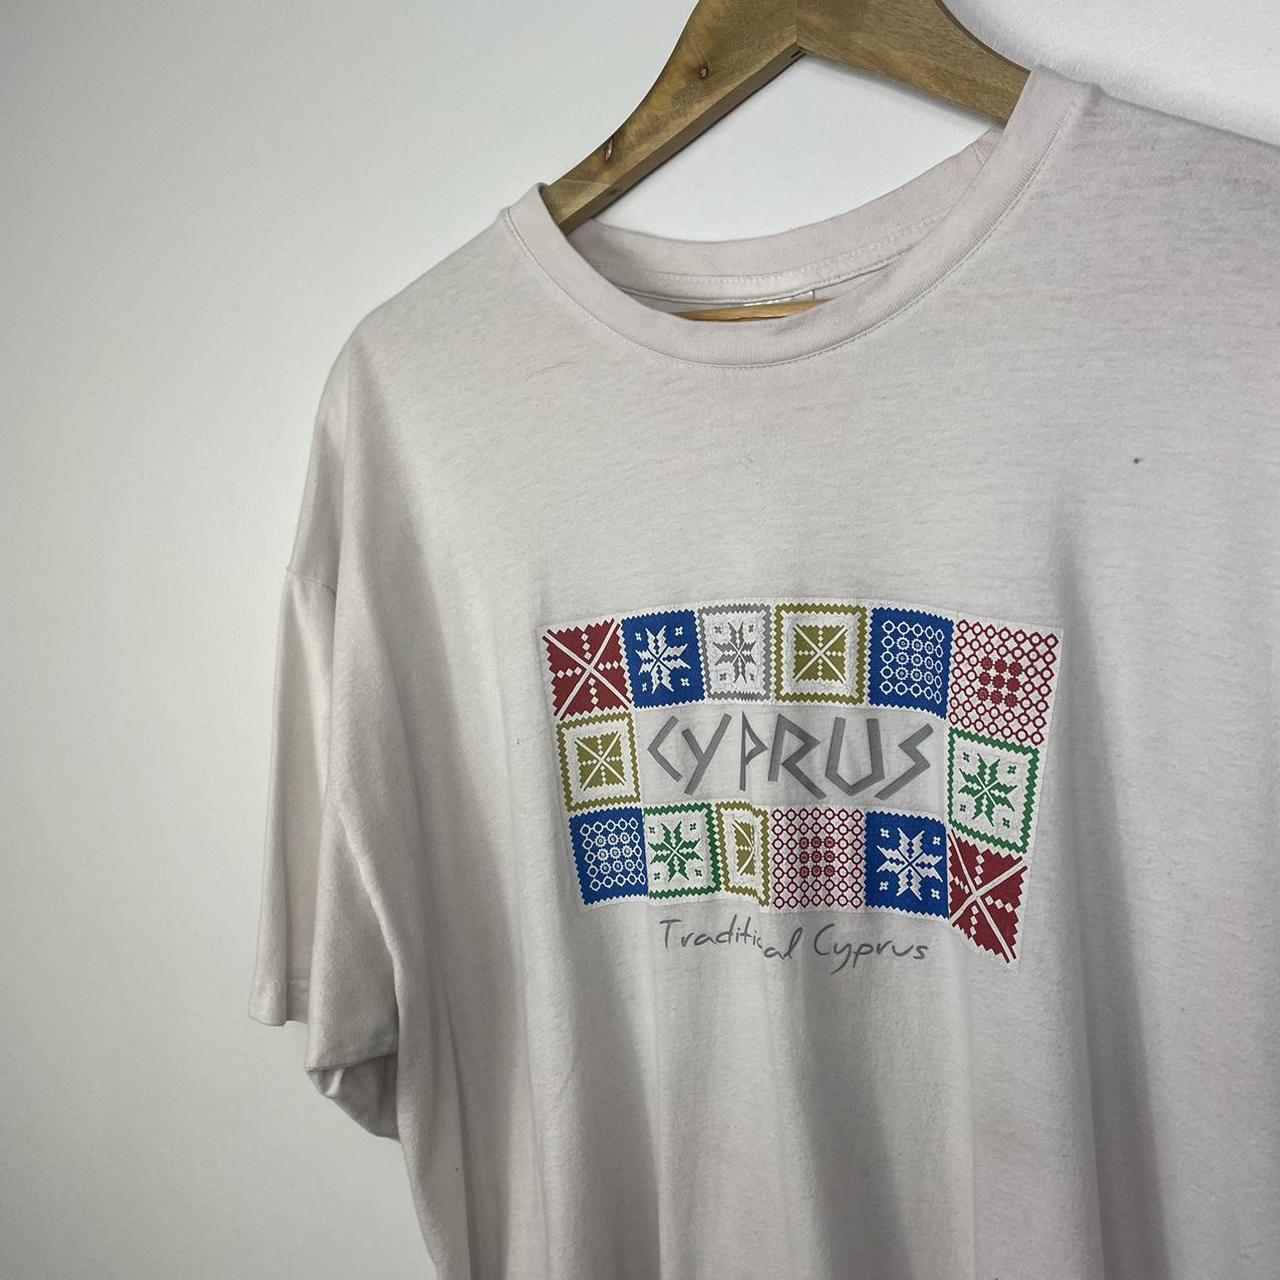 Product Image 2 - Vintage Cyprus T-Shirt

- Big front